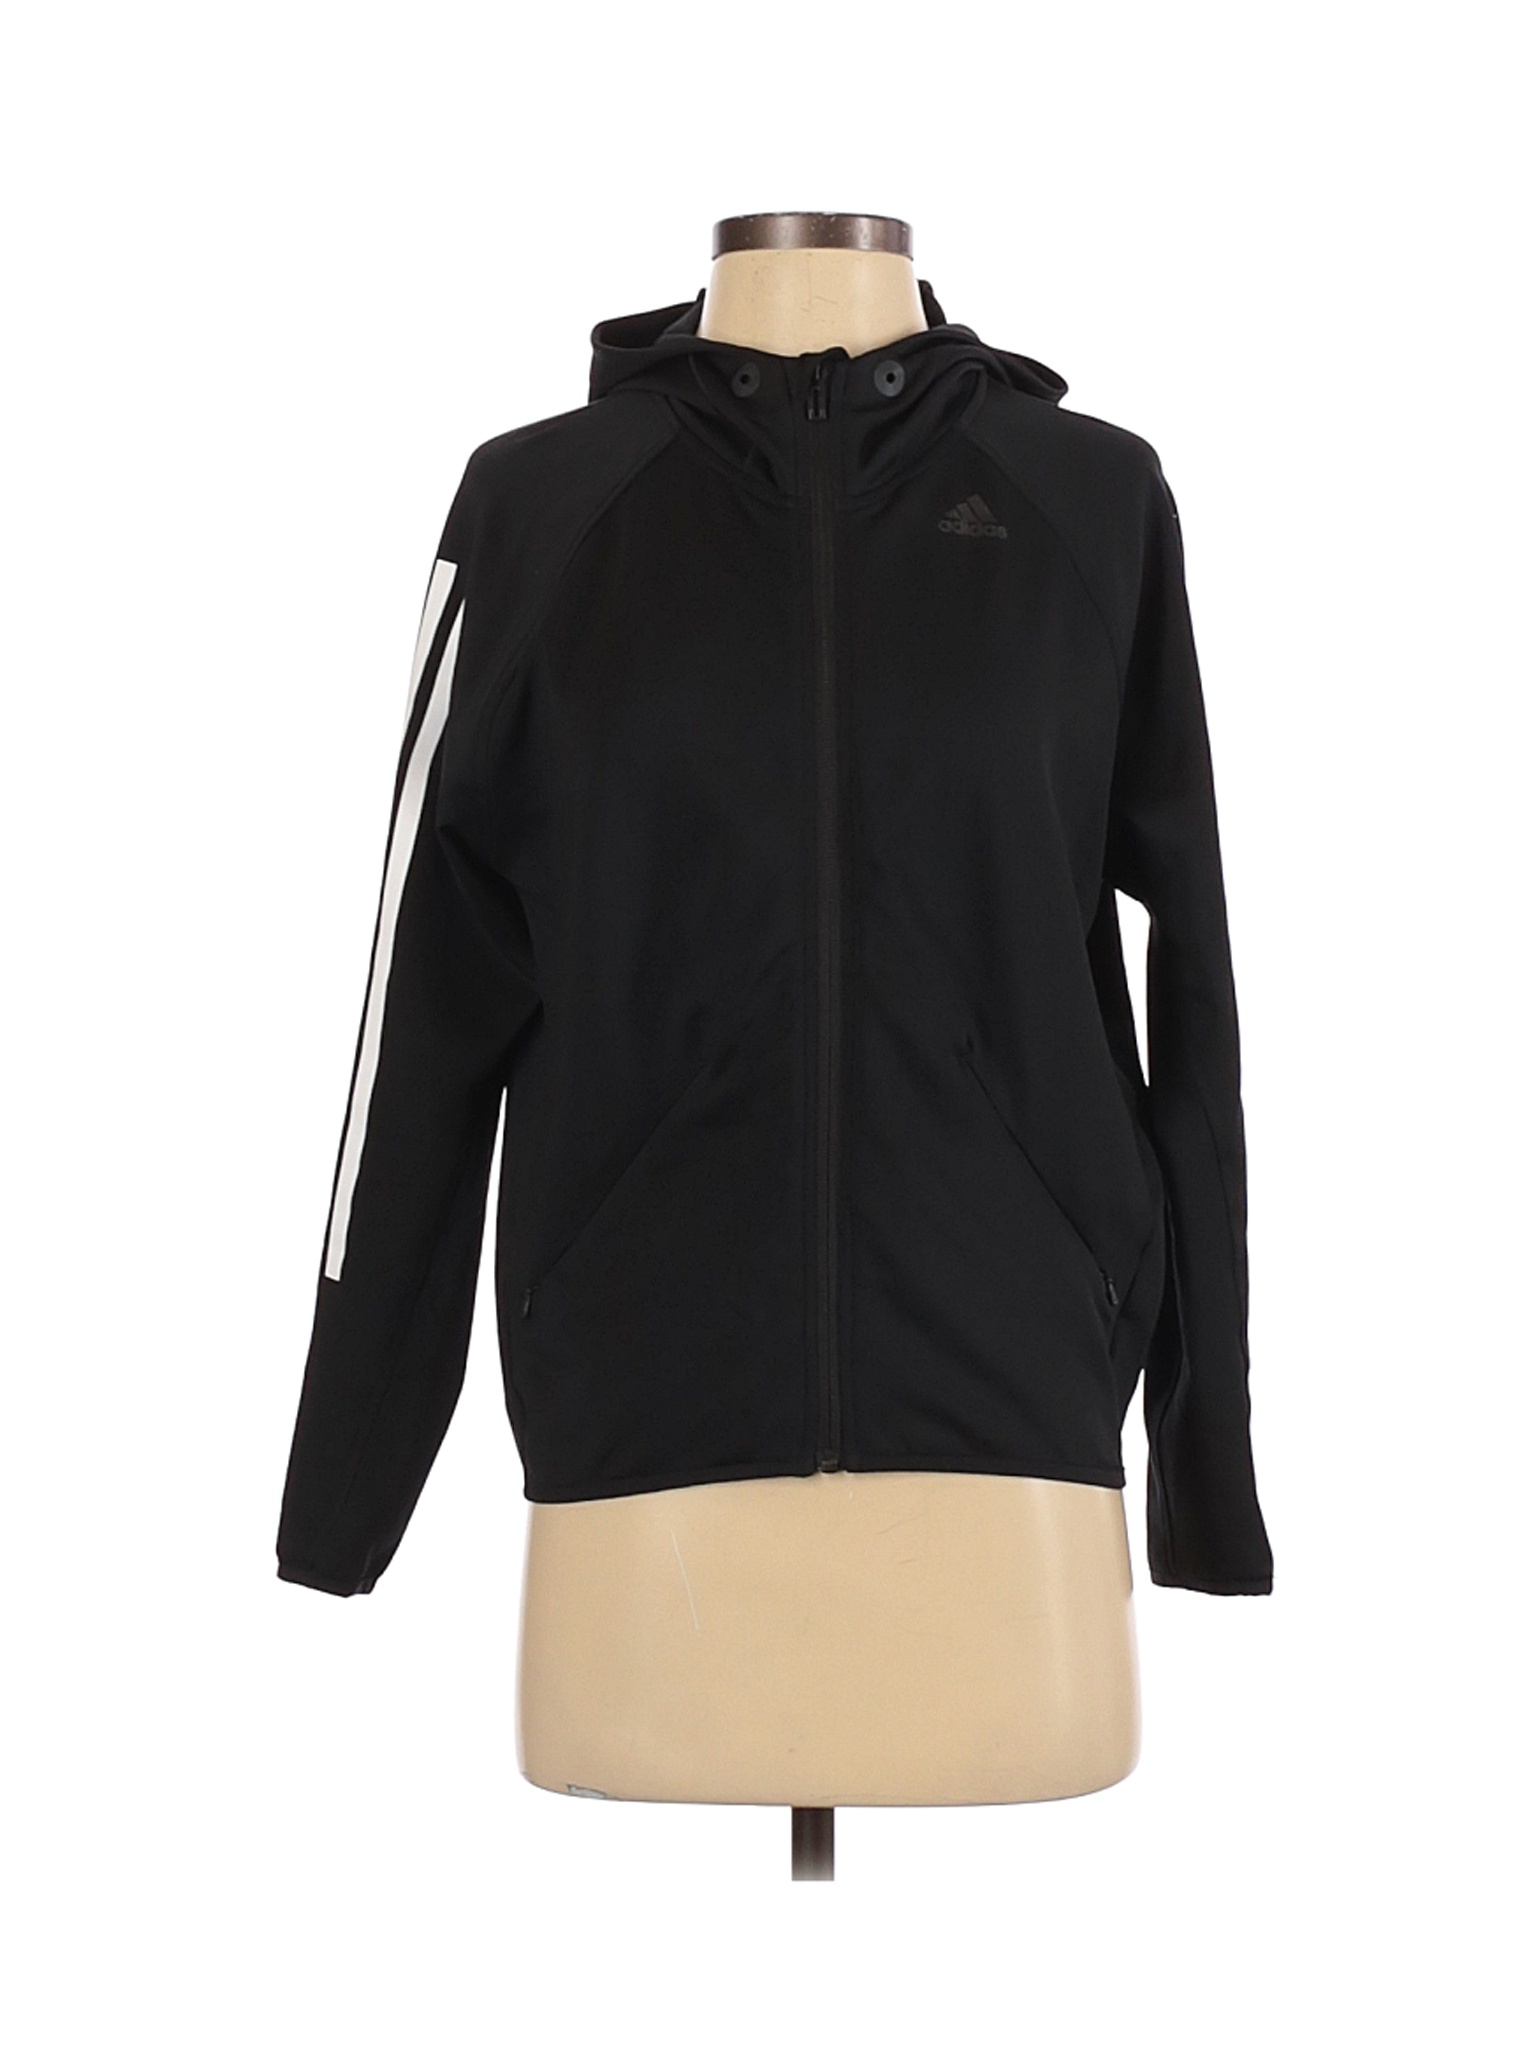 Adidas Women Black Track Jacket S | eBay